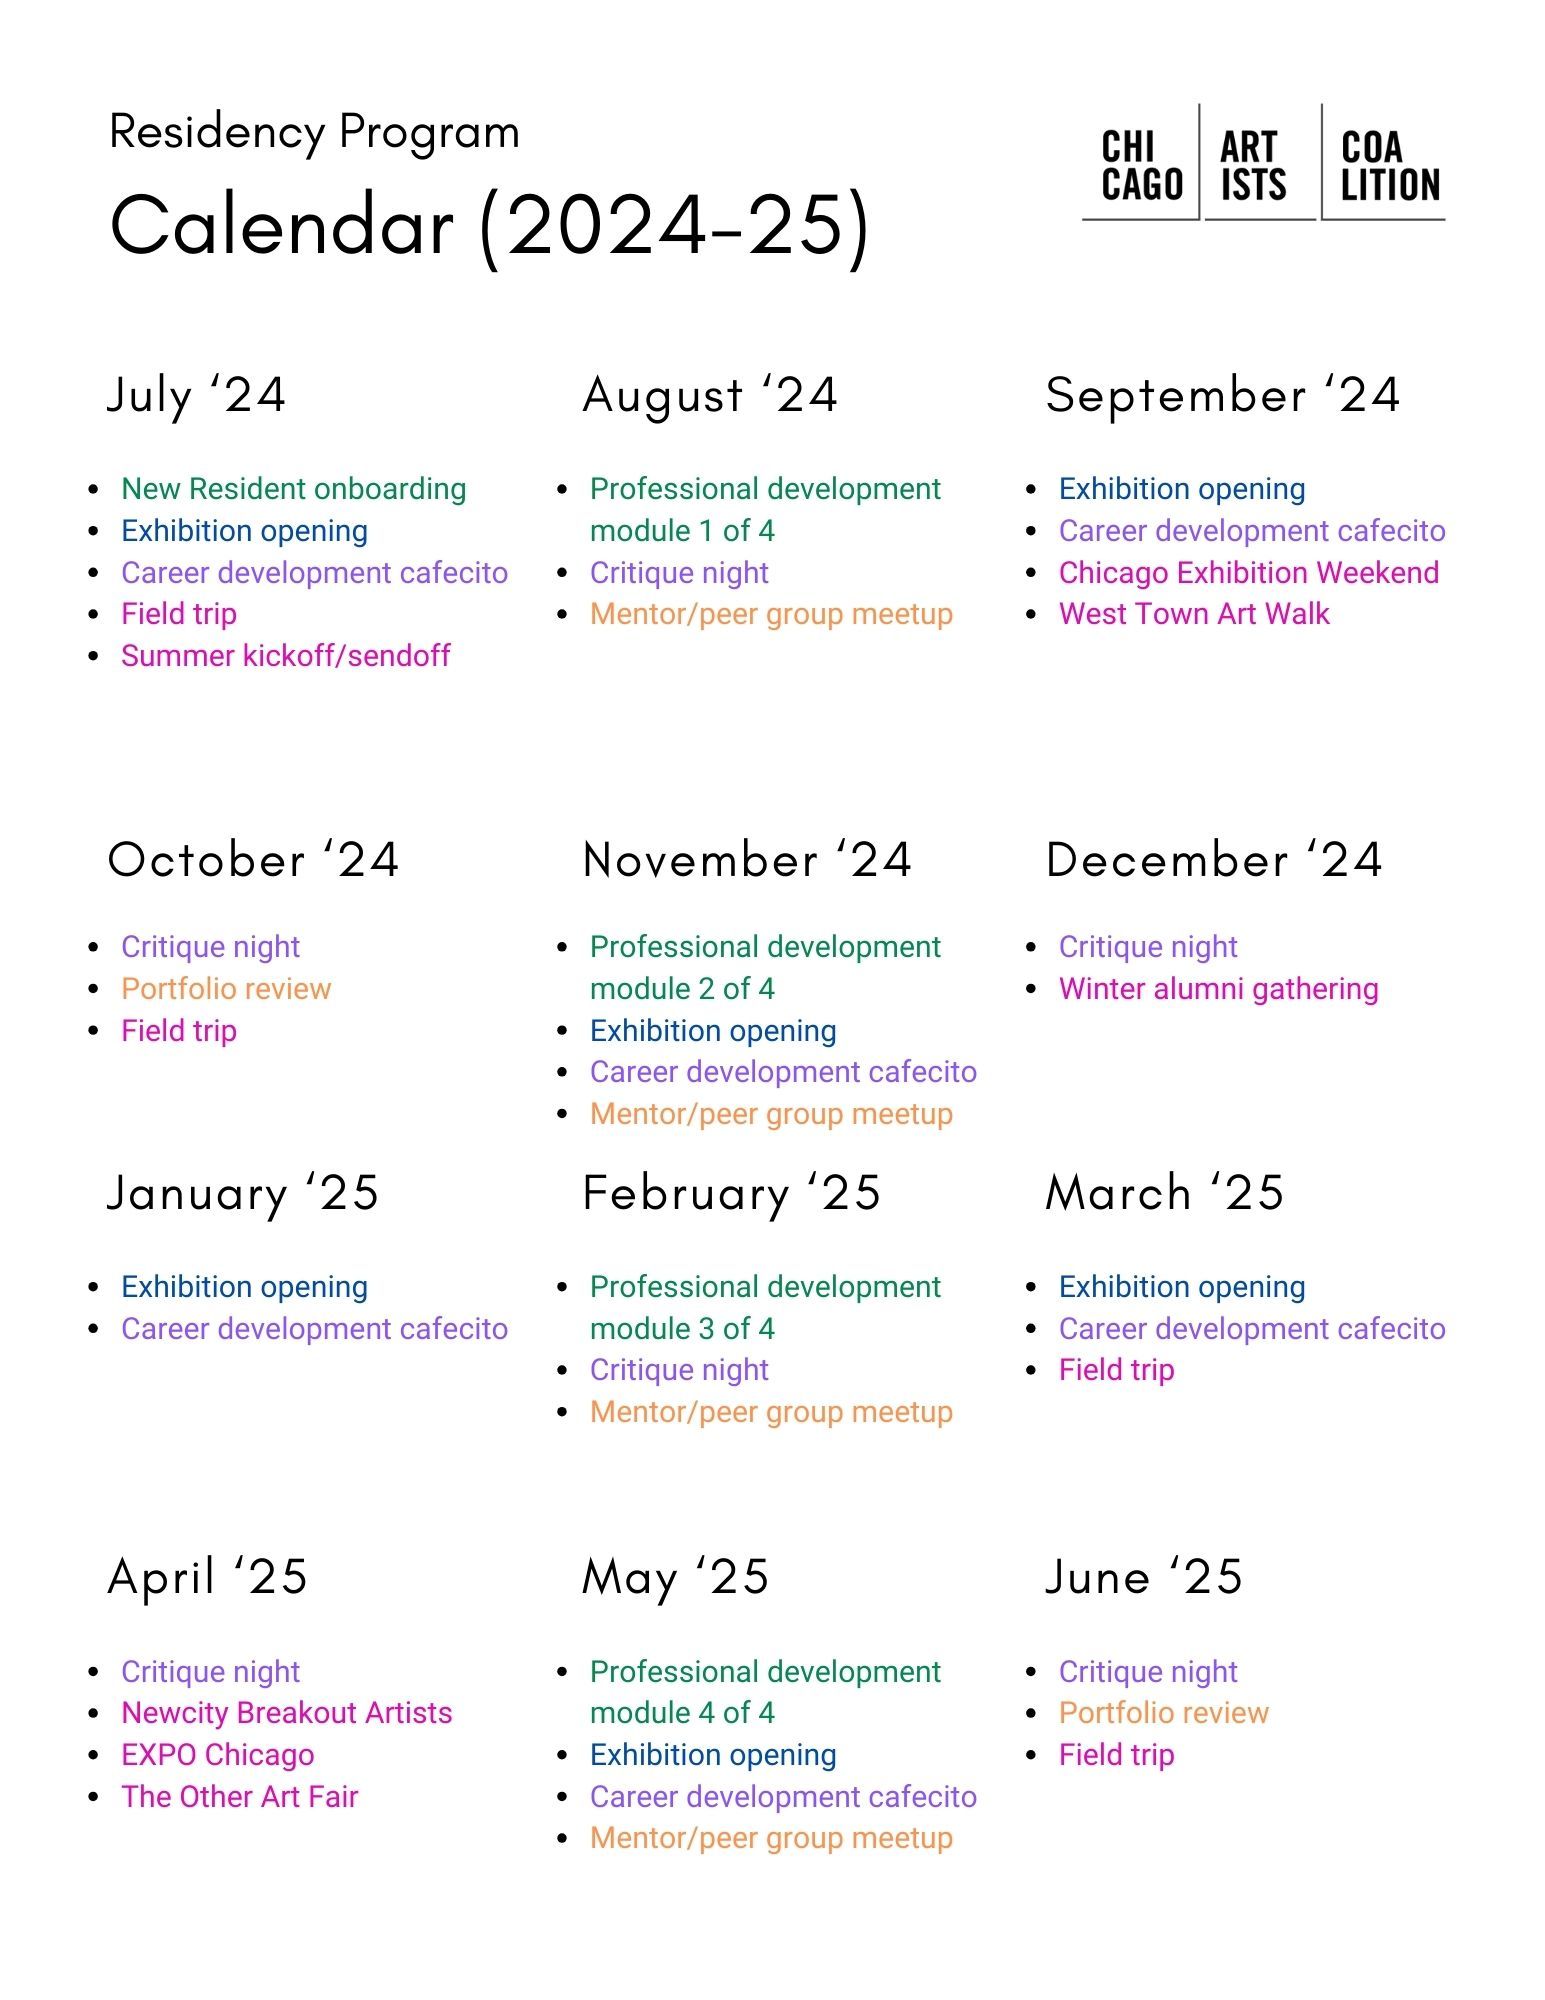 Residency Program Calendar 2024-25